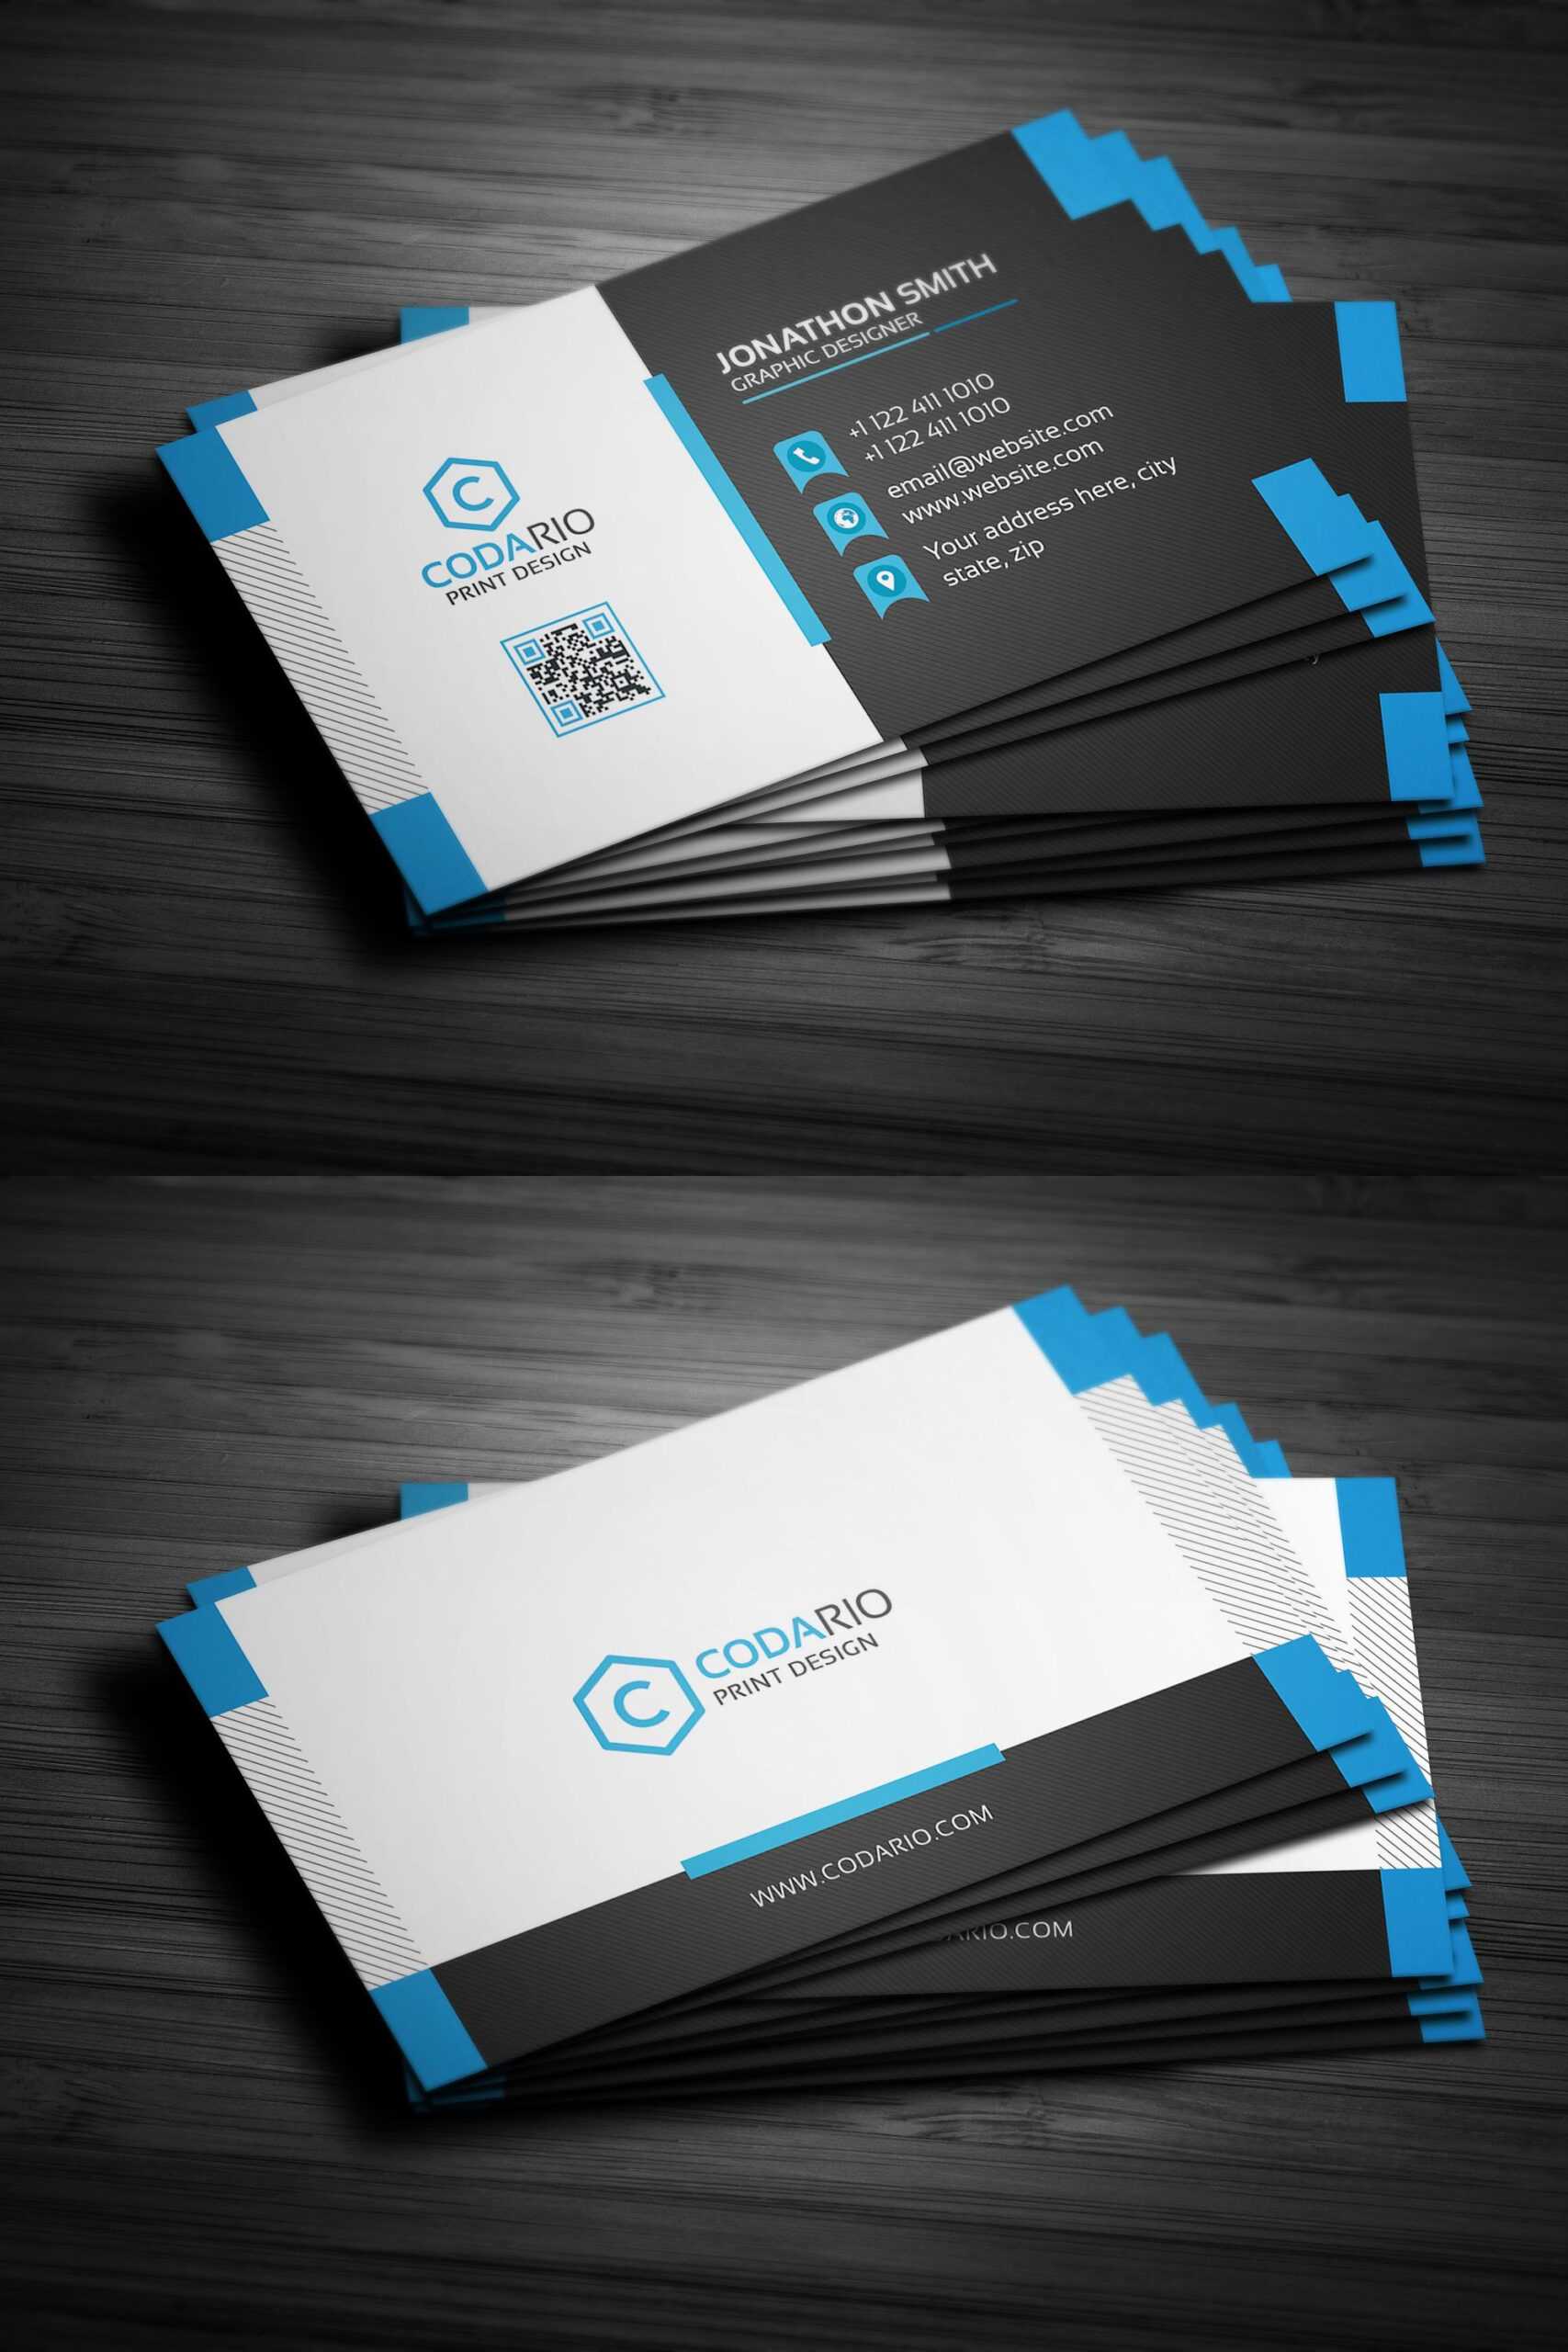 Modern Creative Business Card Template Psd | Business Card Throughout Create Business Card Template Photoshop